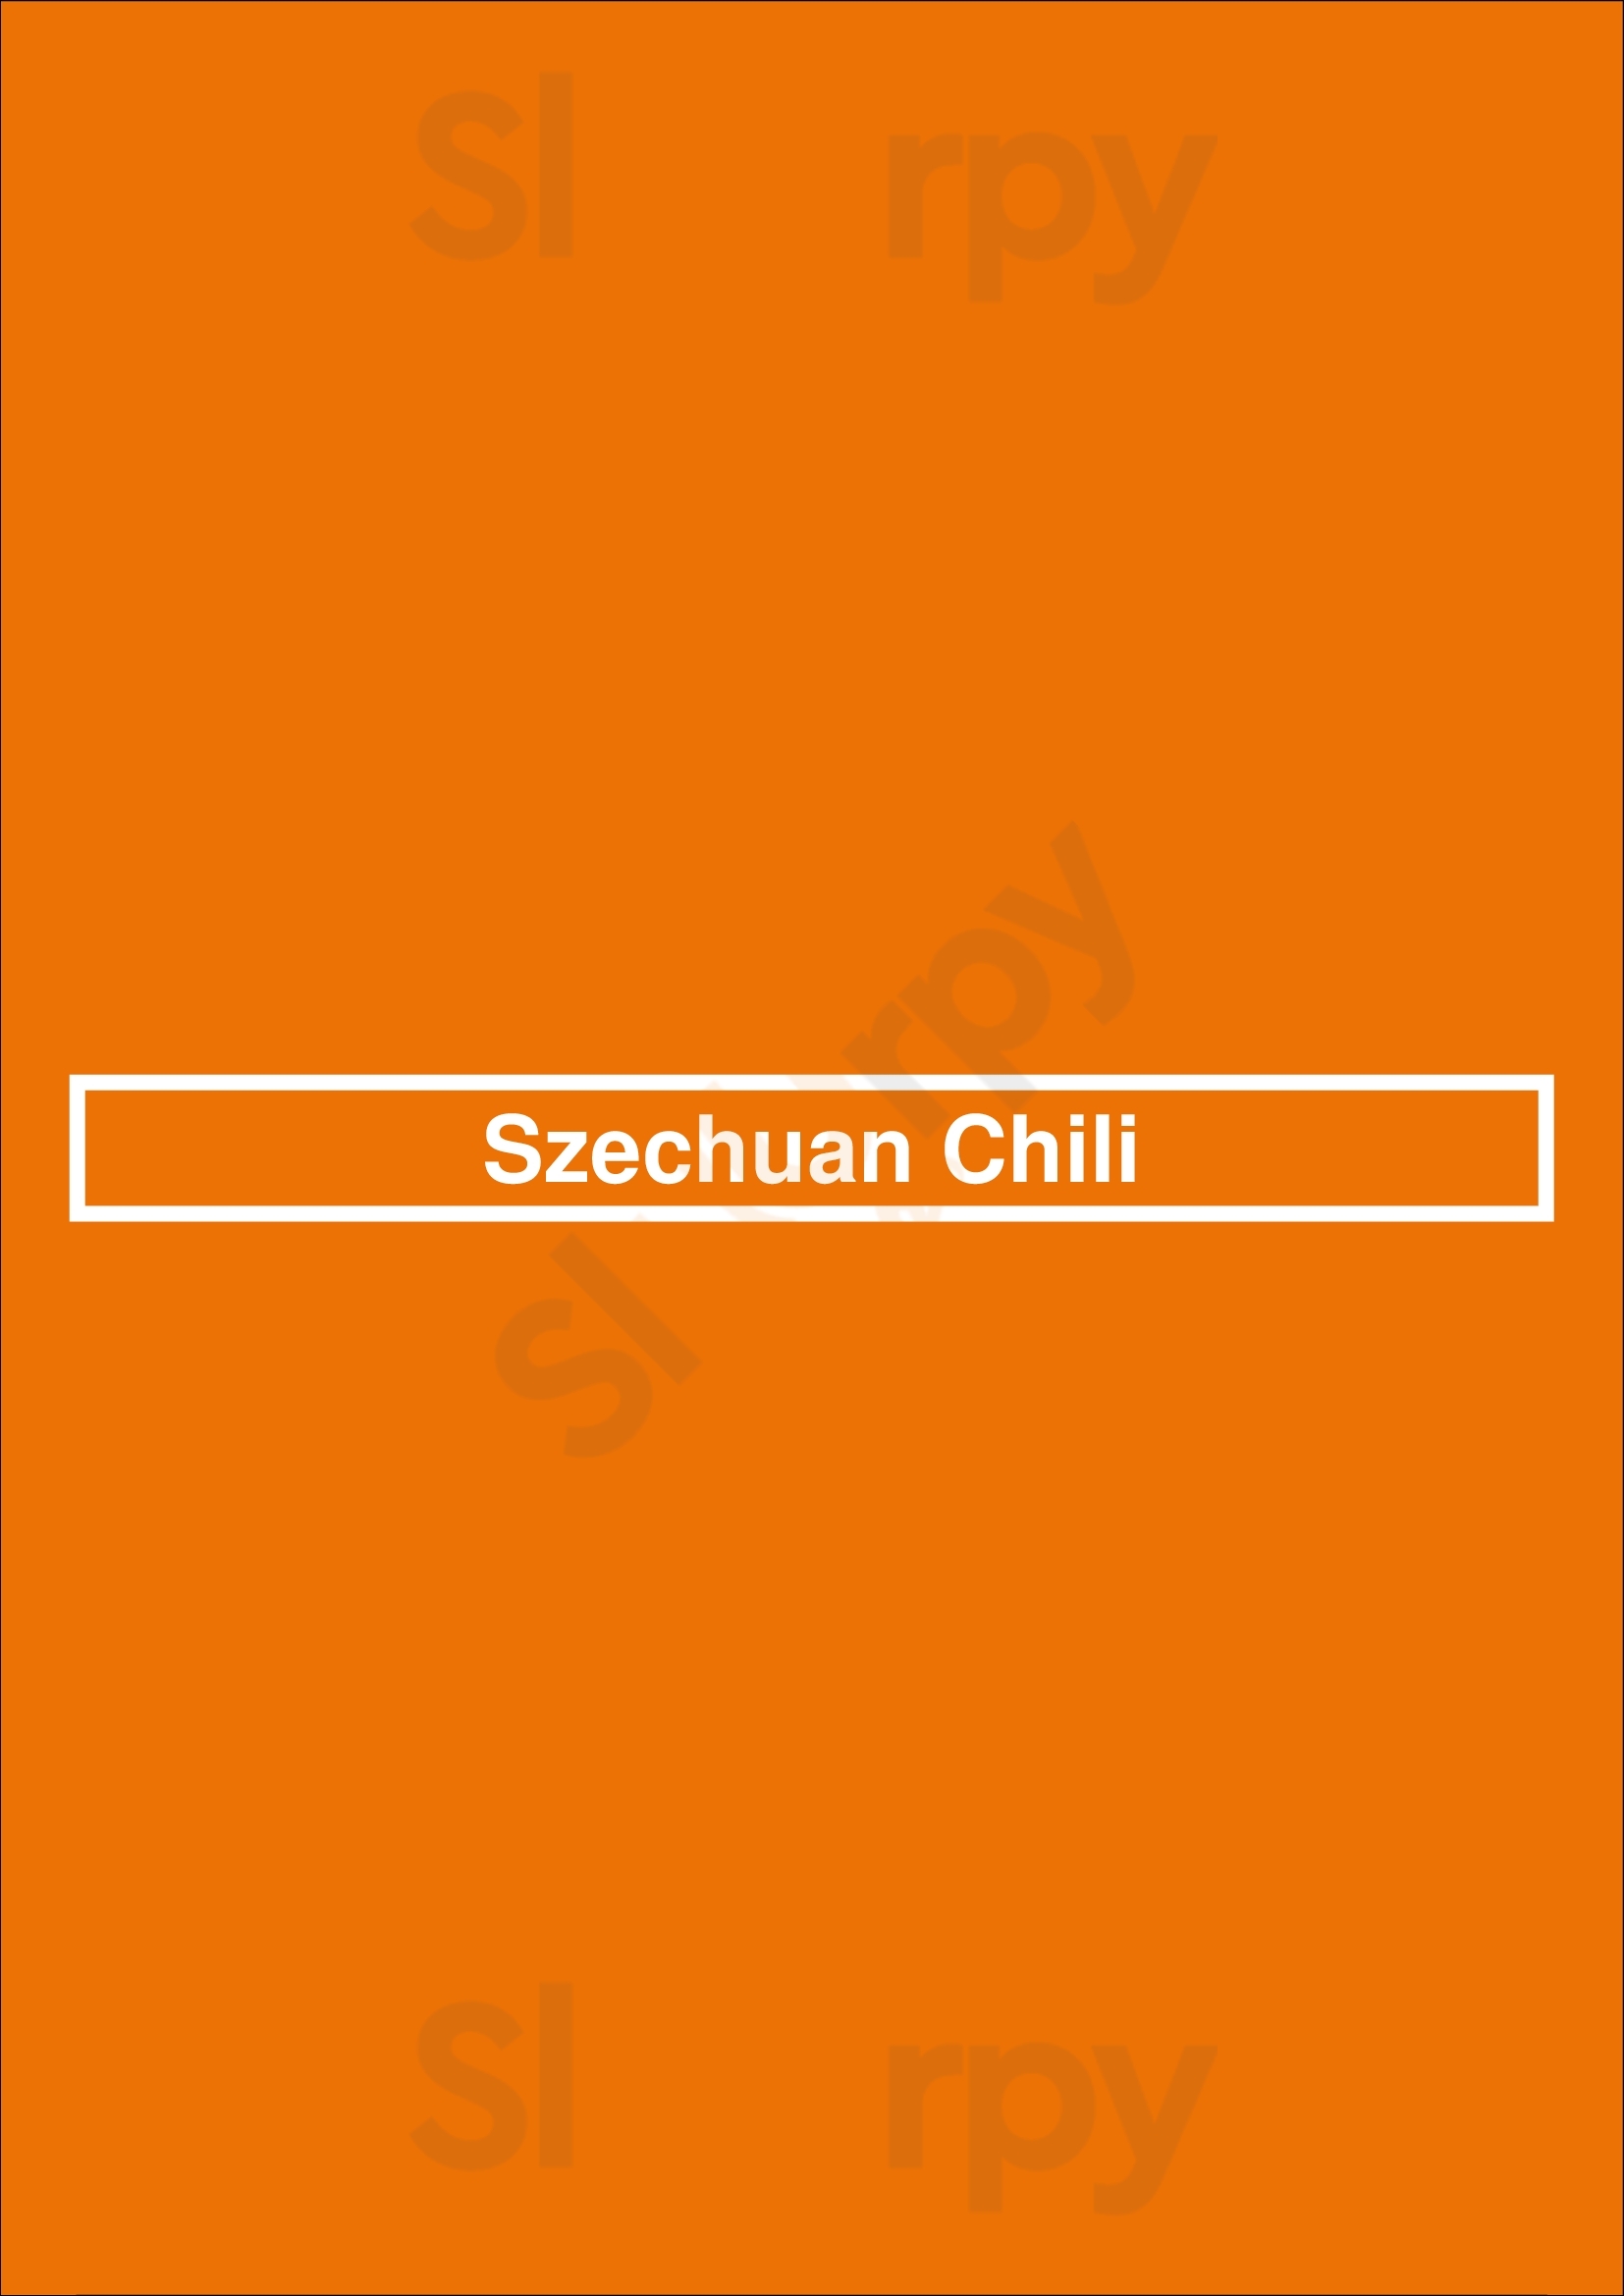 Szechuan Chili Vancouver Menu - 1